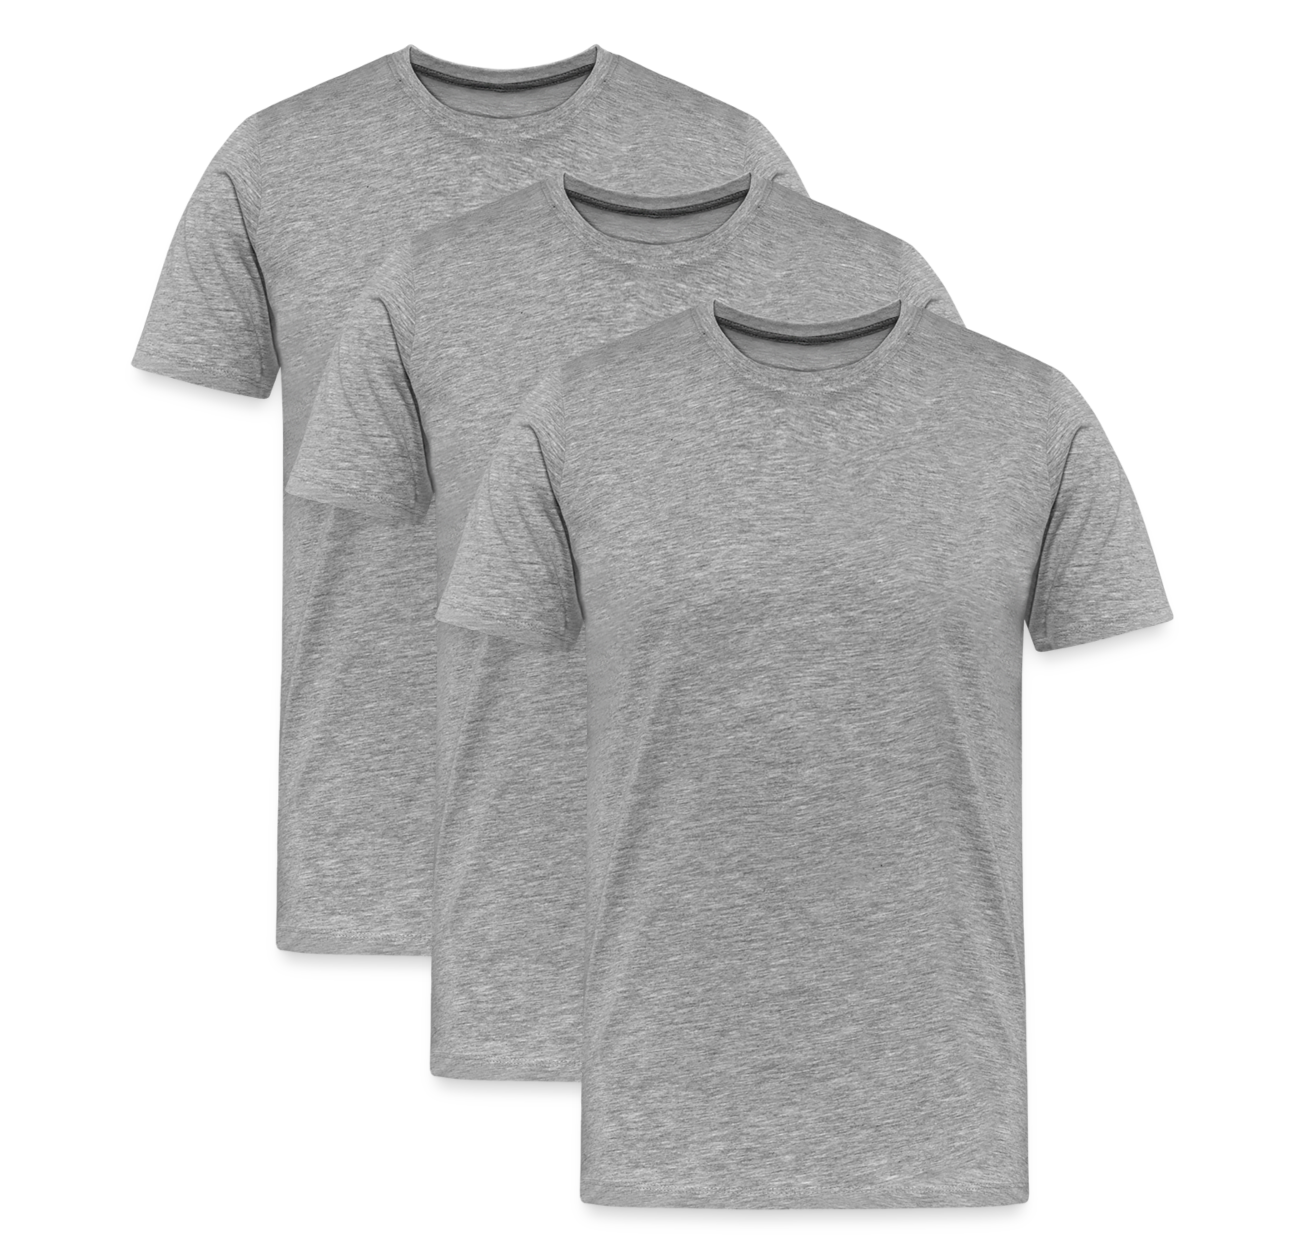 Fluent Tee 3-Pack - Men's Premium T-Shirt from fluentclothing.com